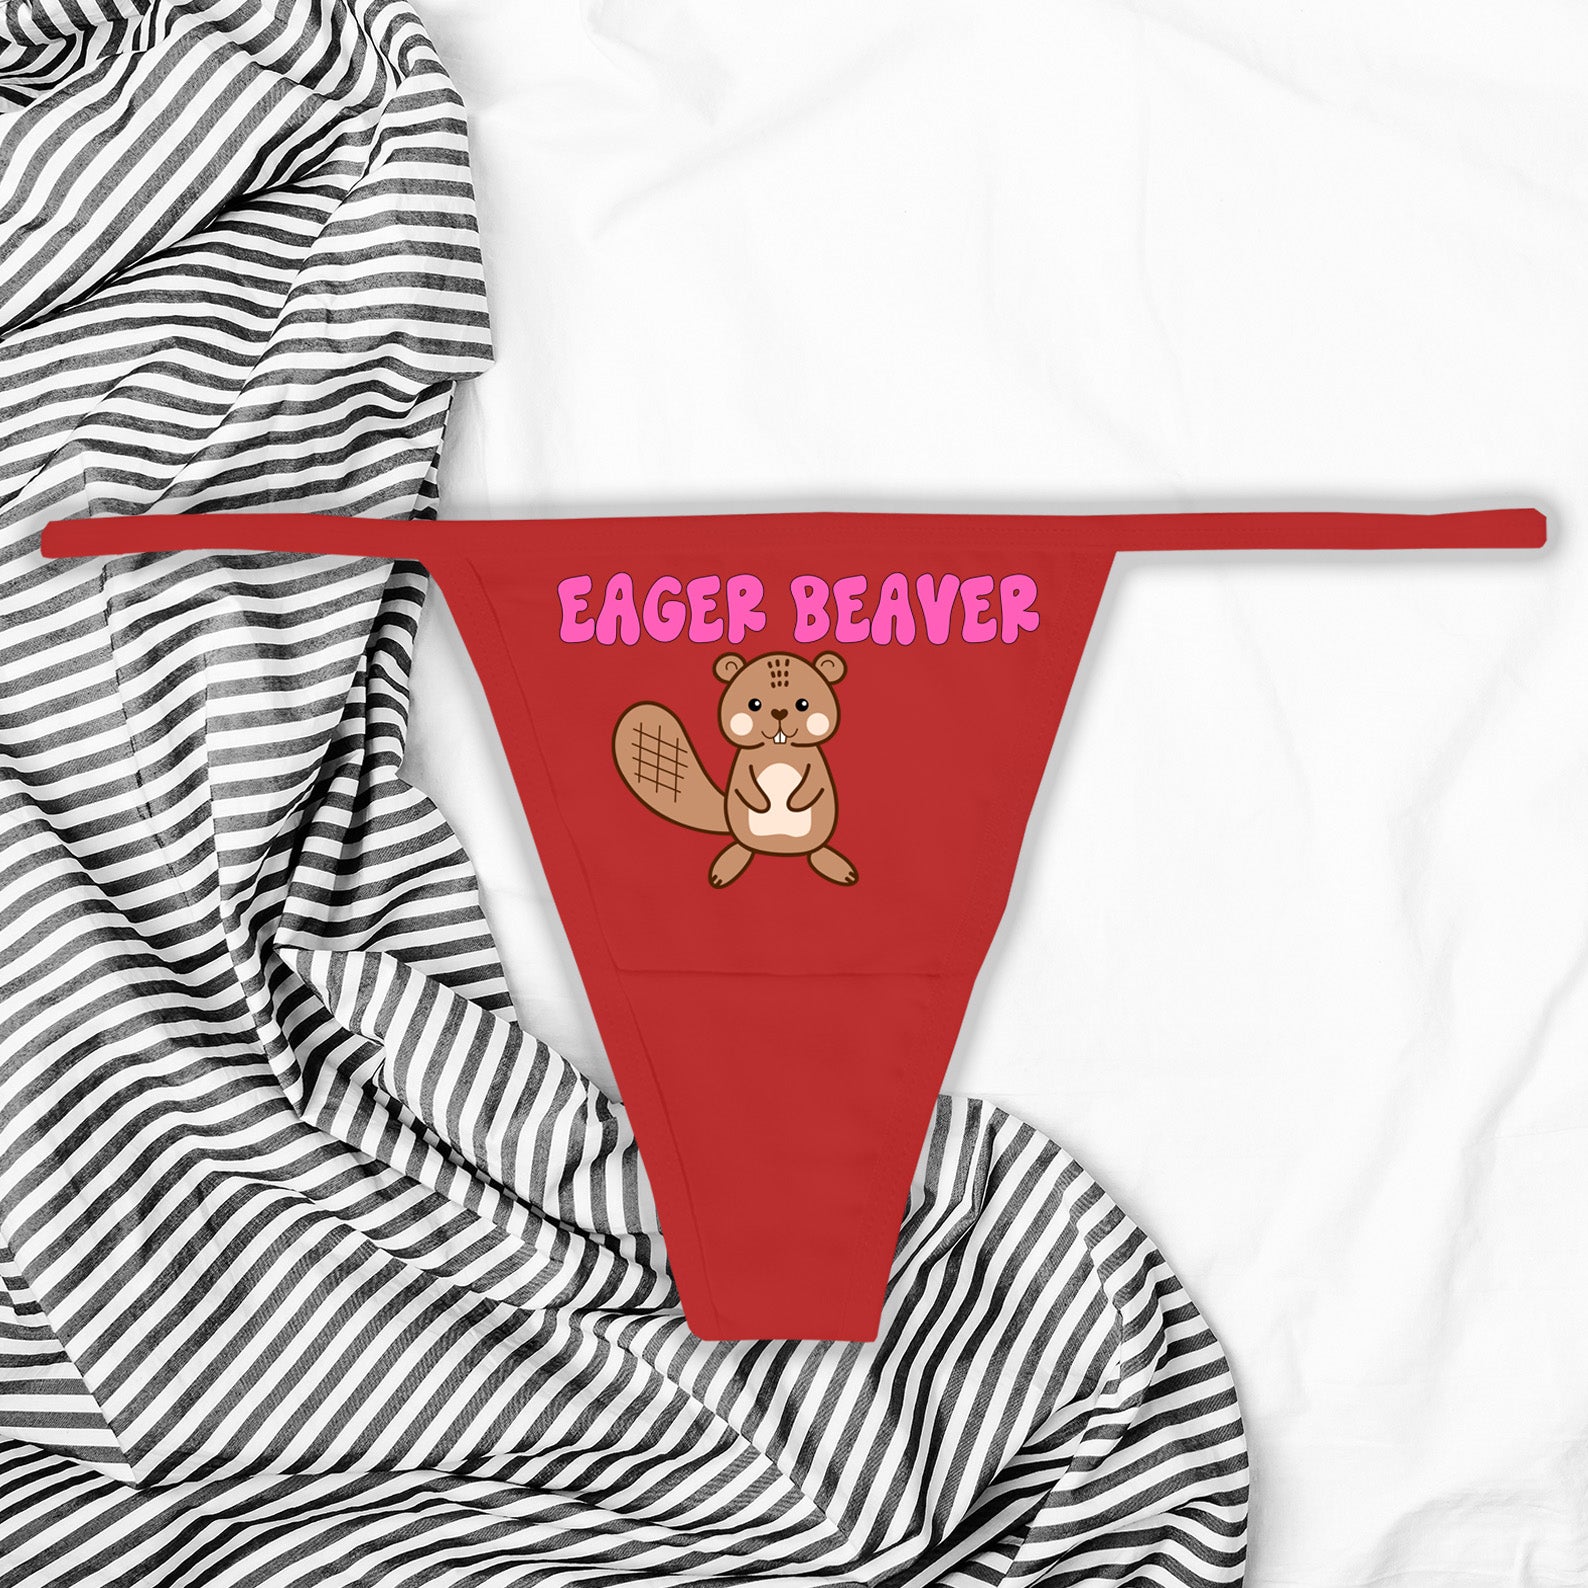 Eager Beaver Thong